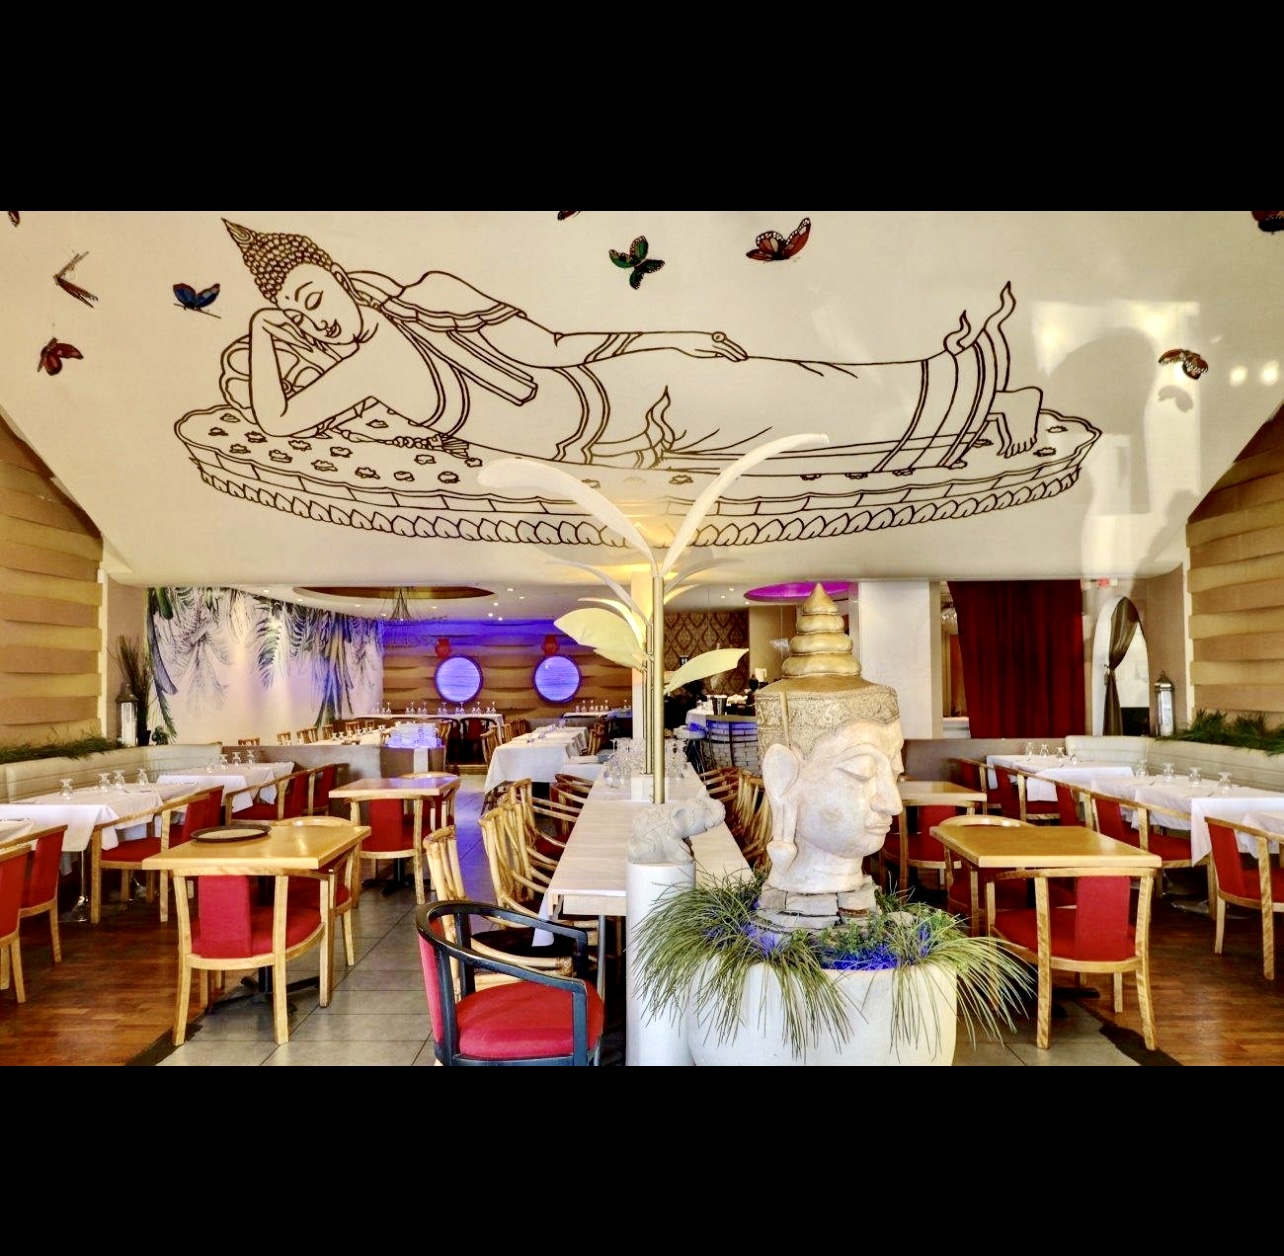 Sawadika, un restaurant avec une grande fresque murale au mur.